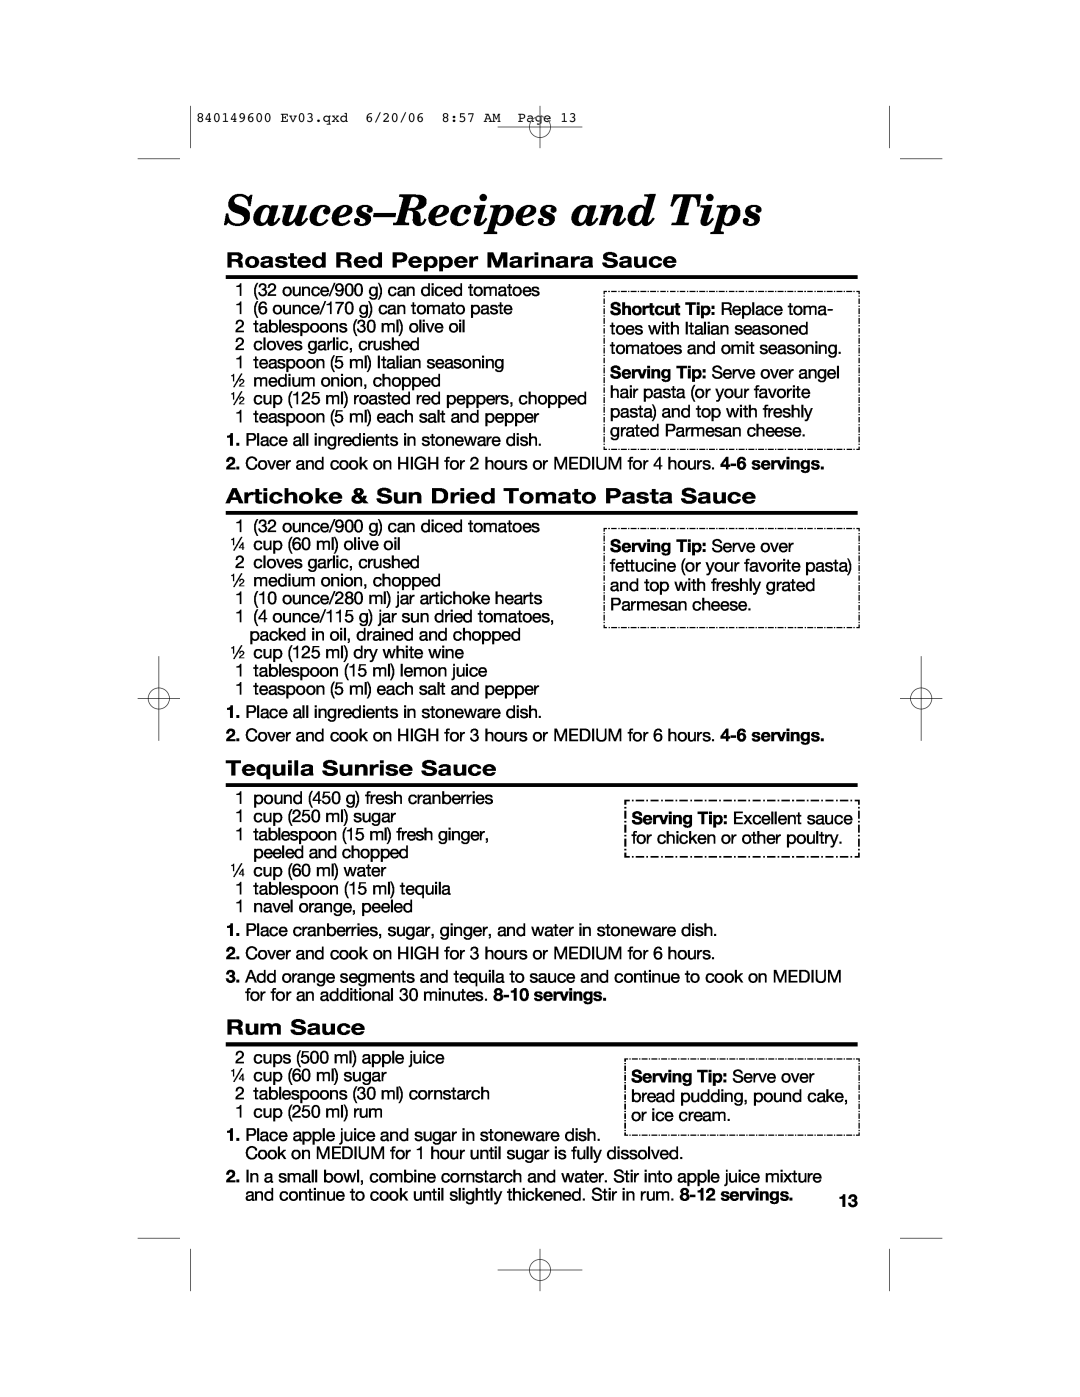 Hamilton Beach 840149600 manual Sauces-Recipesand Tips, Roasted Red Pepper Marinara Sauce, Tequila Sunrise Sauce, Rum Sauce 